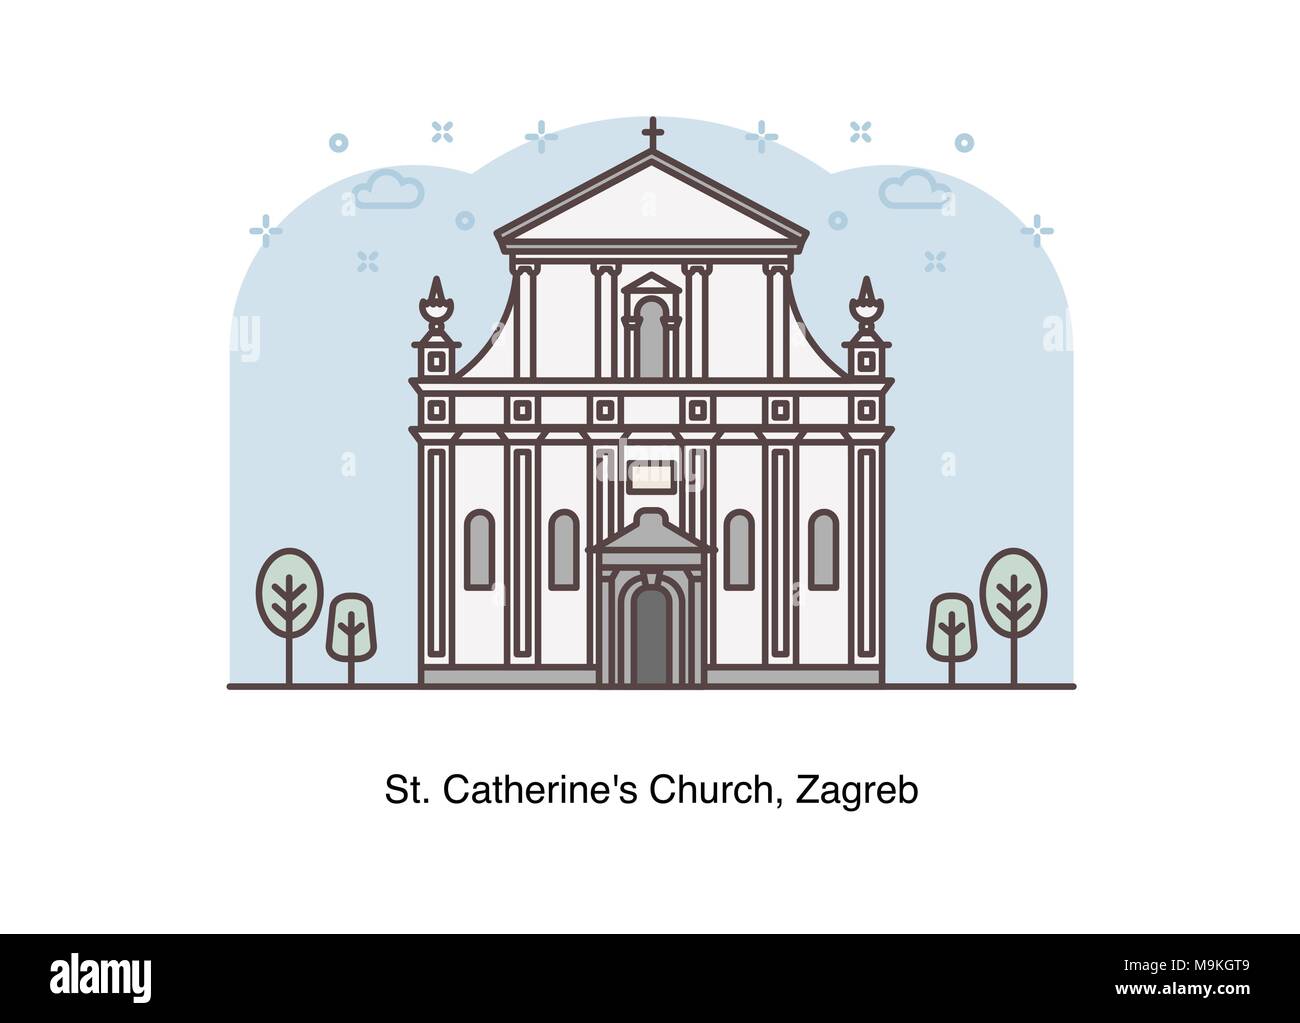 Vector line illustration of St. Catherine's Church, Zagreb, Croatia. Stock Vector